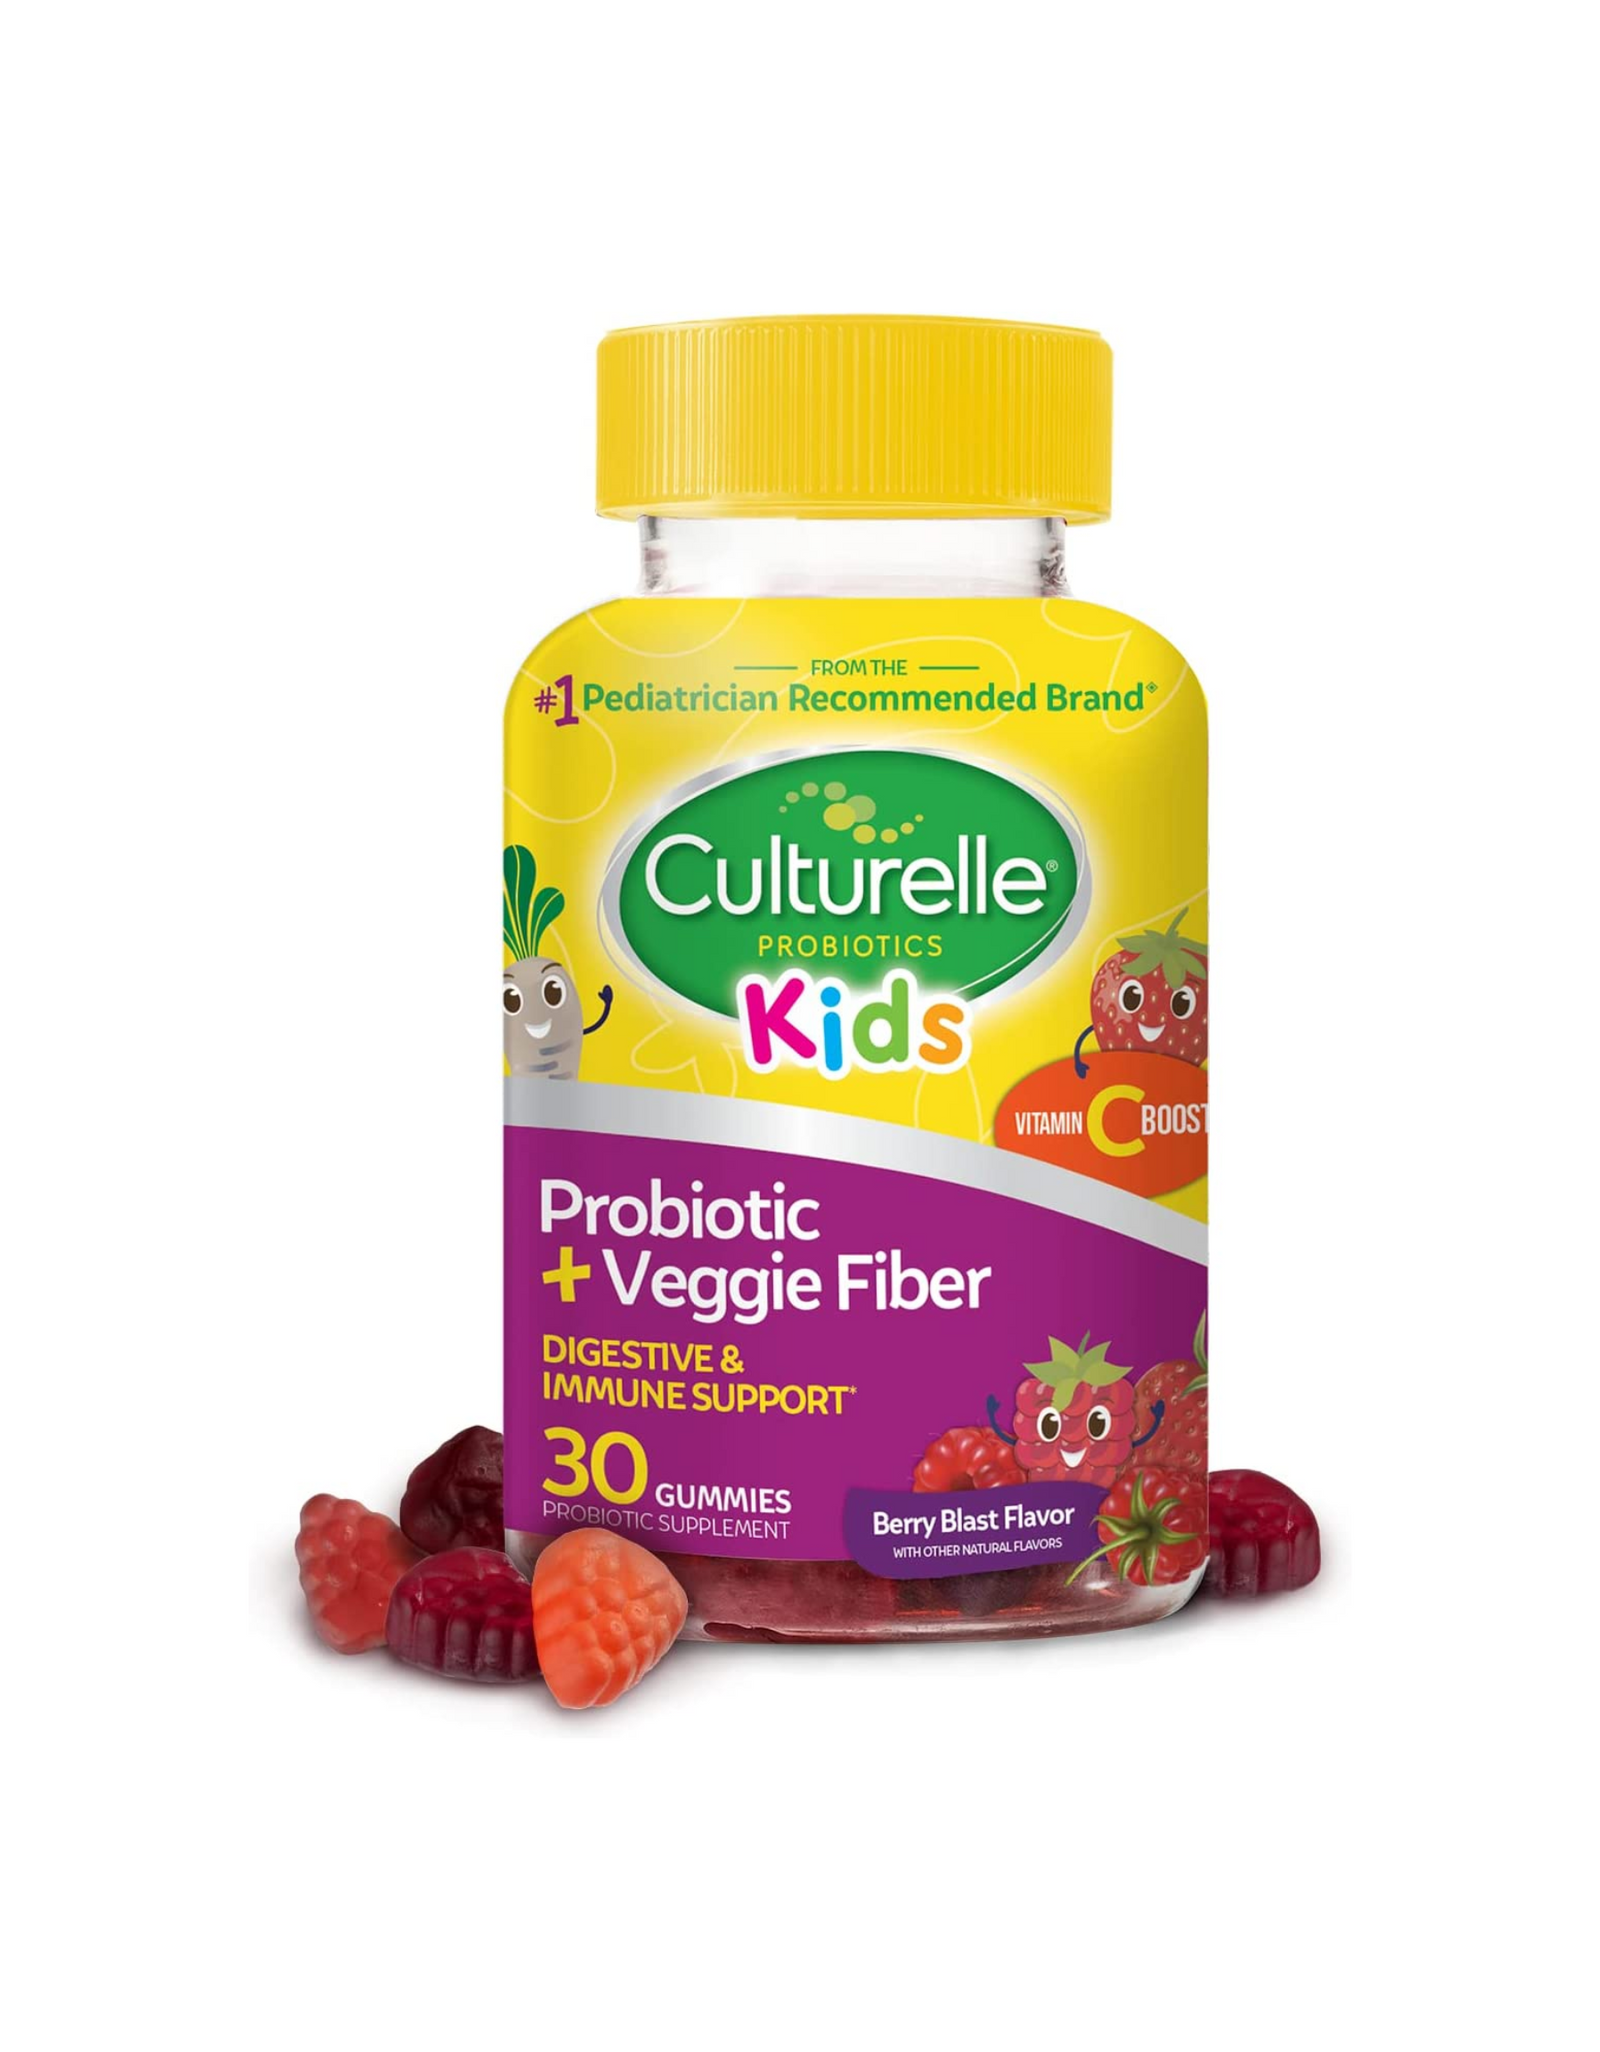 Culturelle Kids Daily Probiotic + Veggie Fiber Gummies, Prebiotic + Probiotic with Vitamin C Boost, Mixed Berry Flavor, 30 Ct